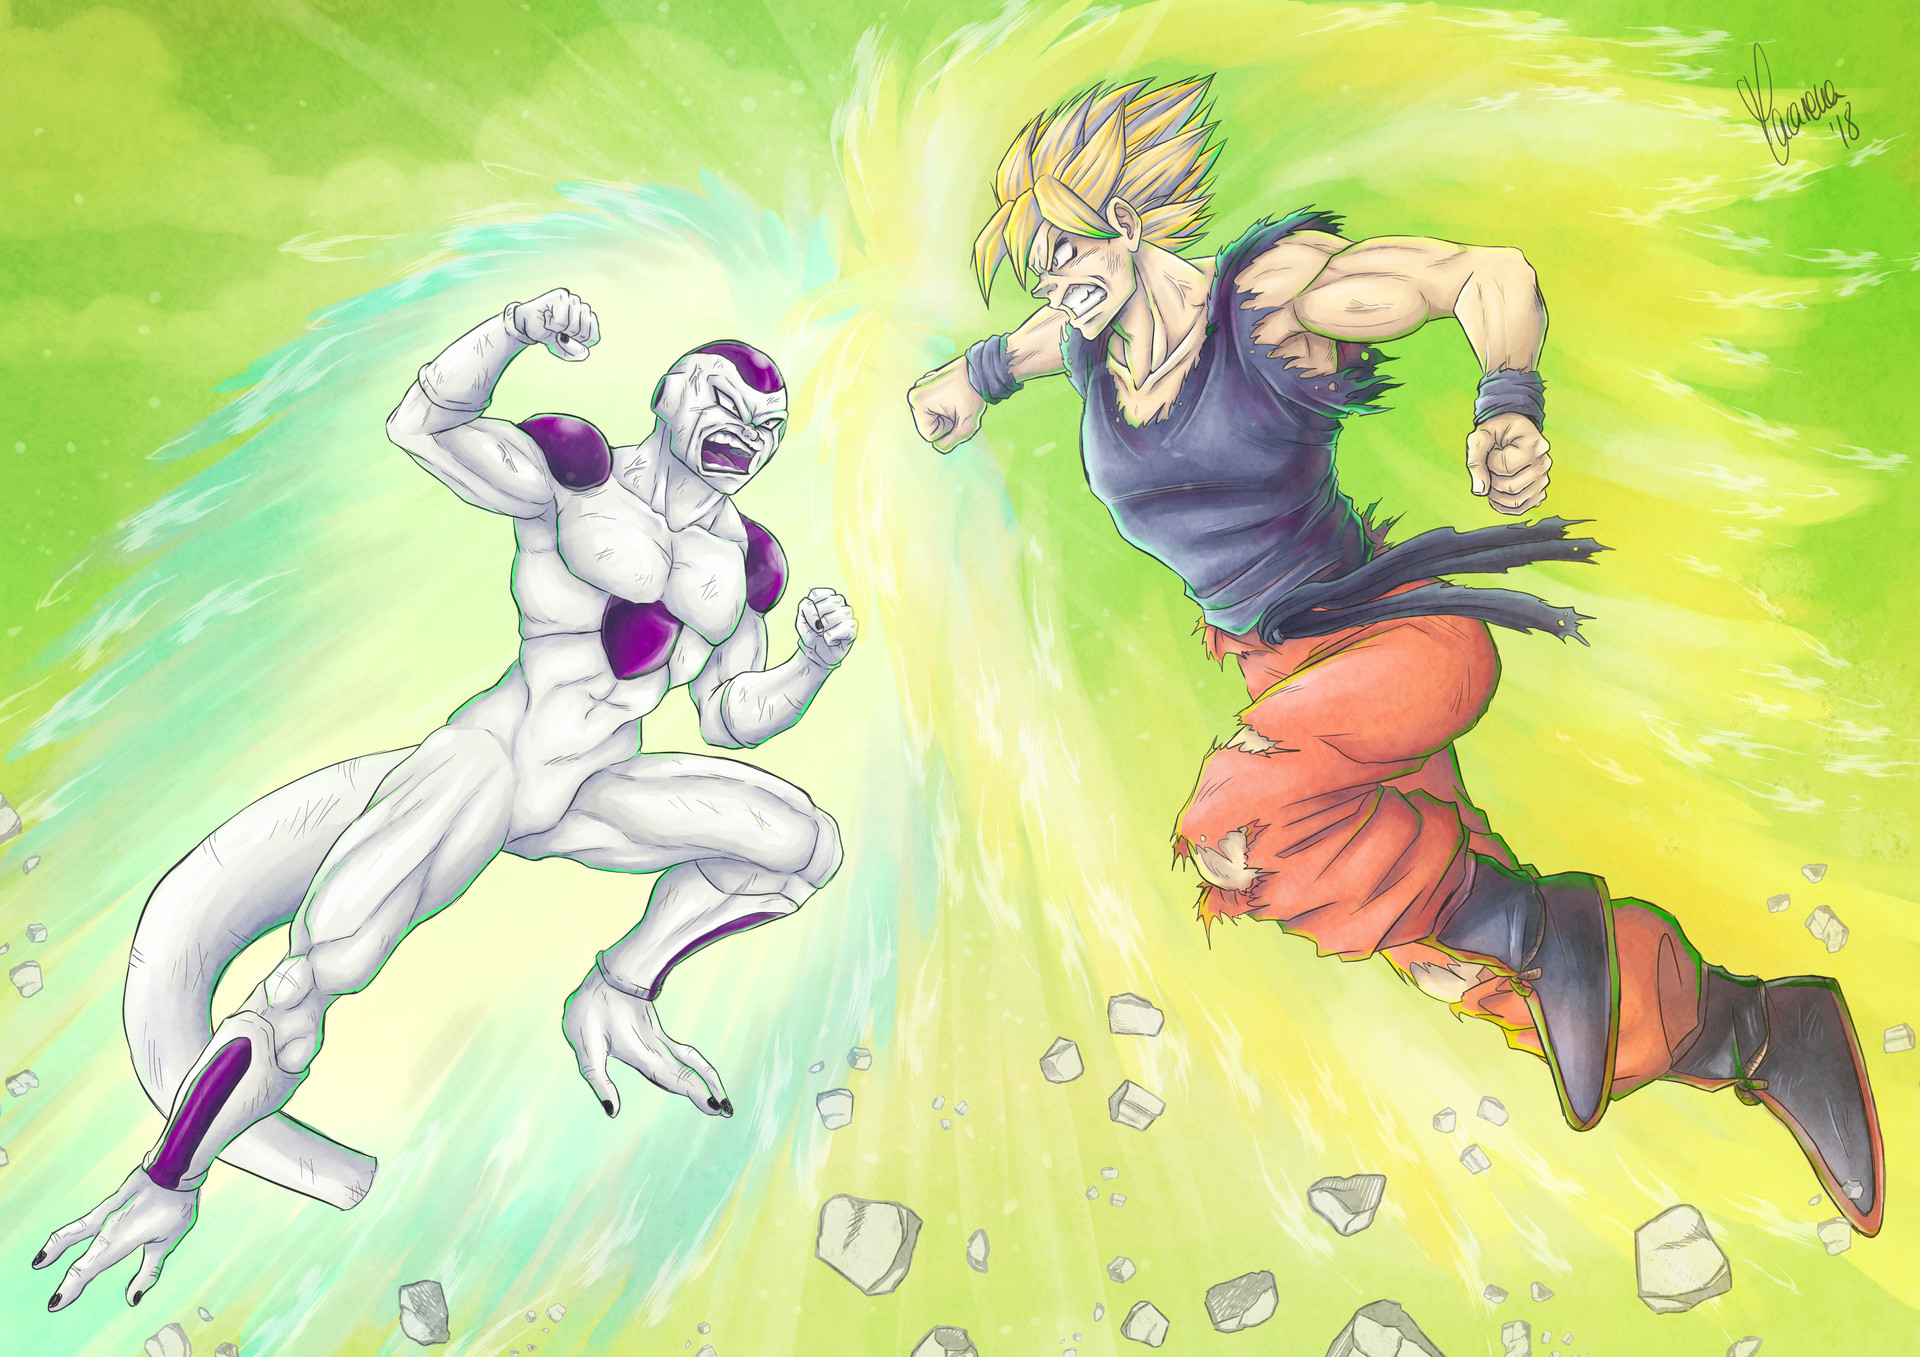 ArtStation - Goku vs. Freezer